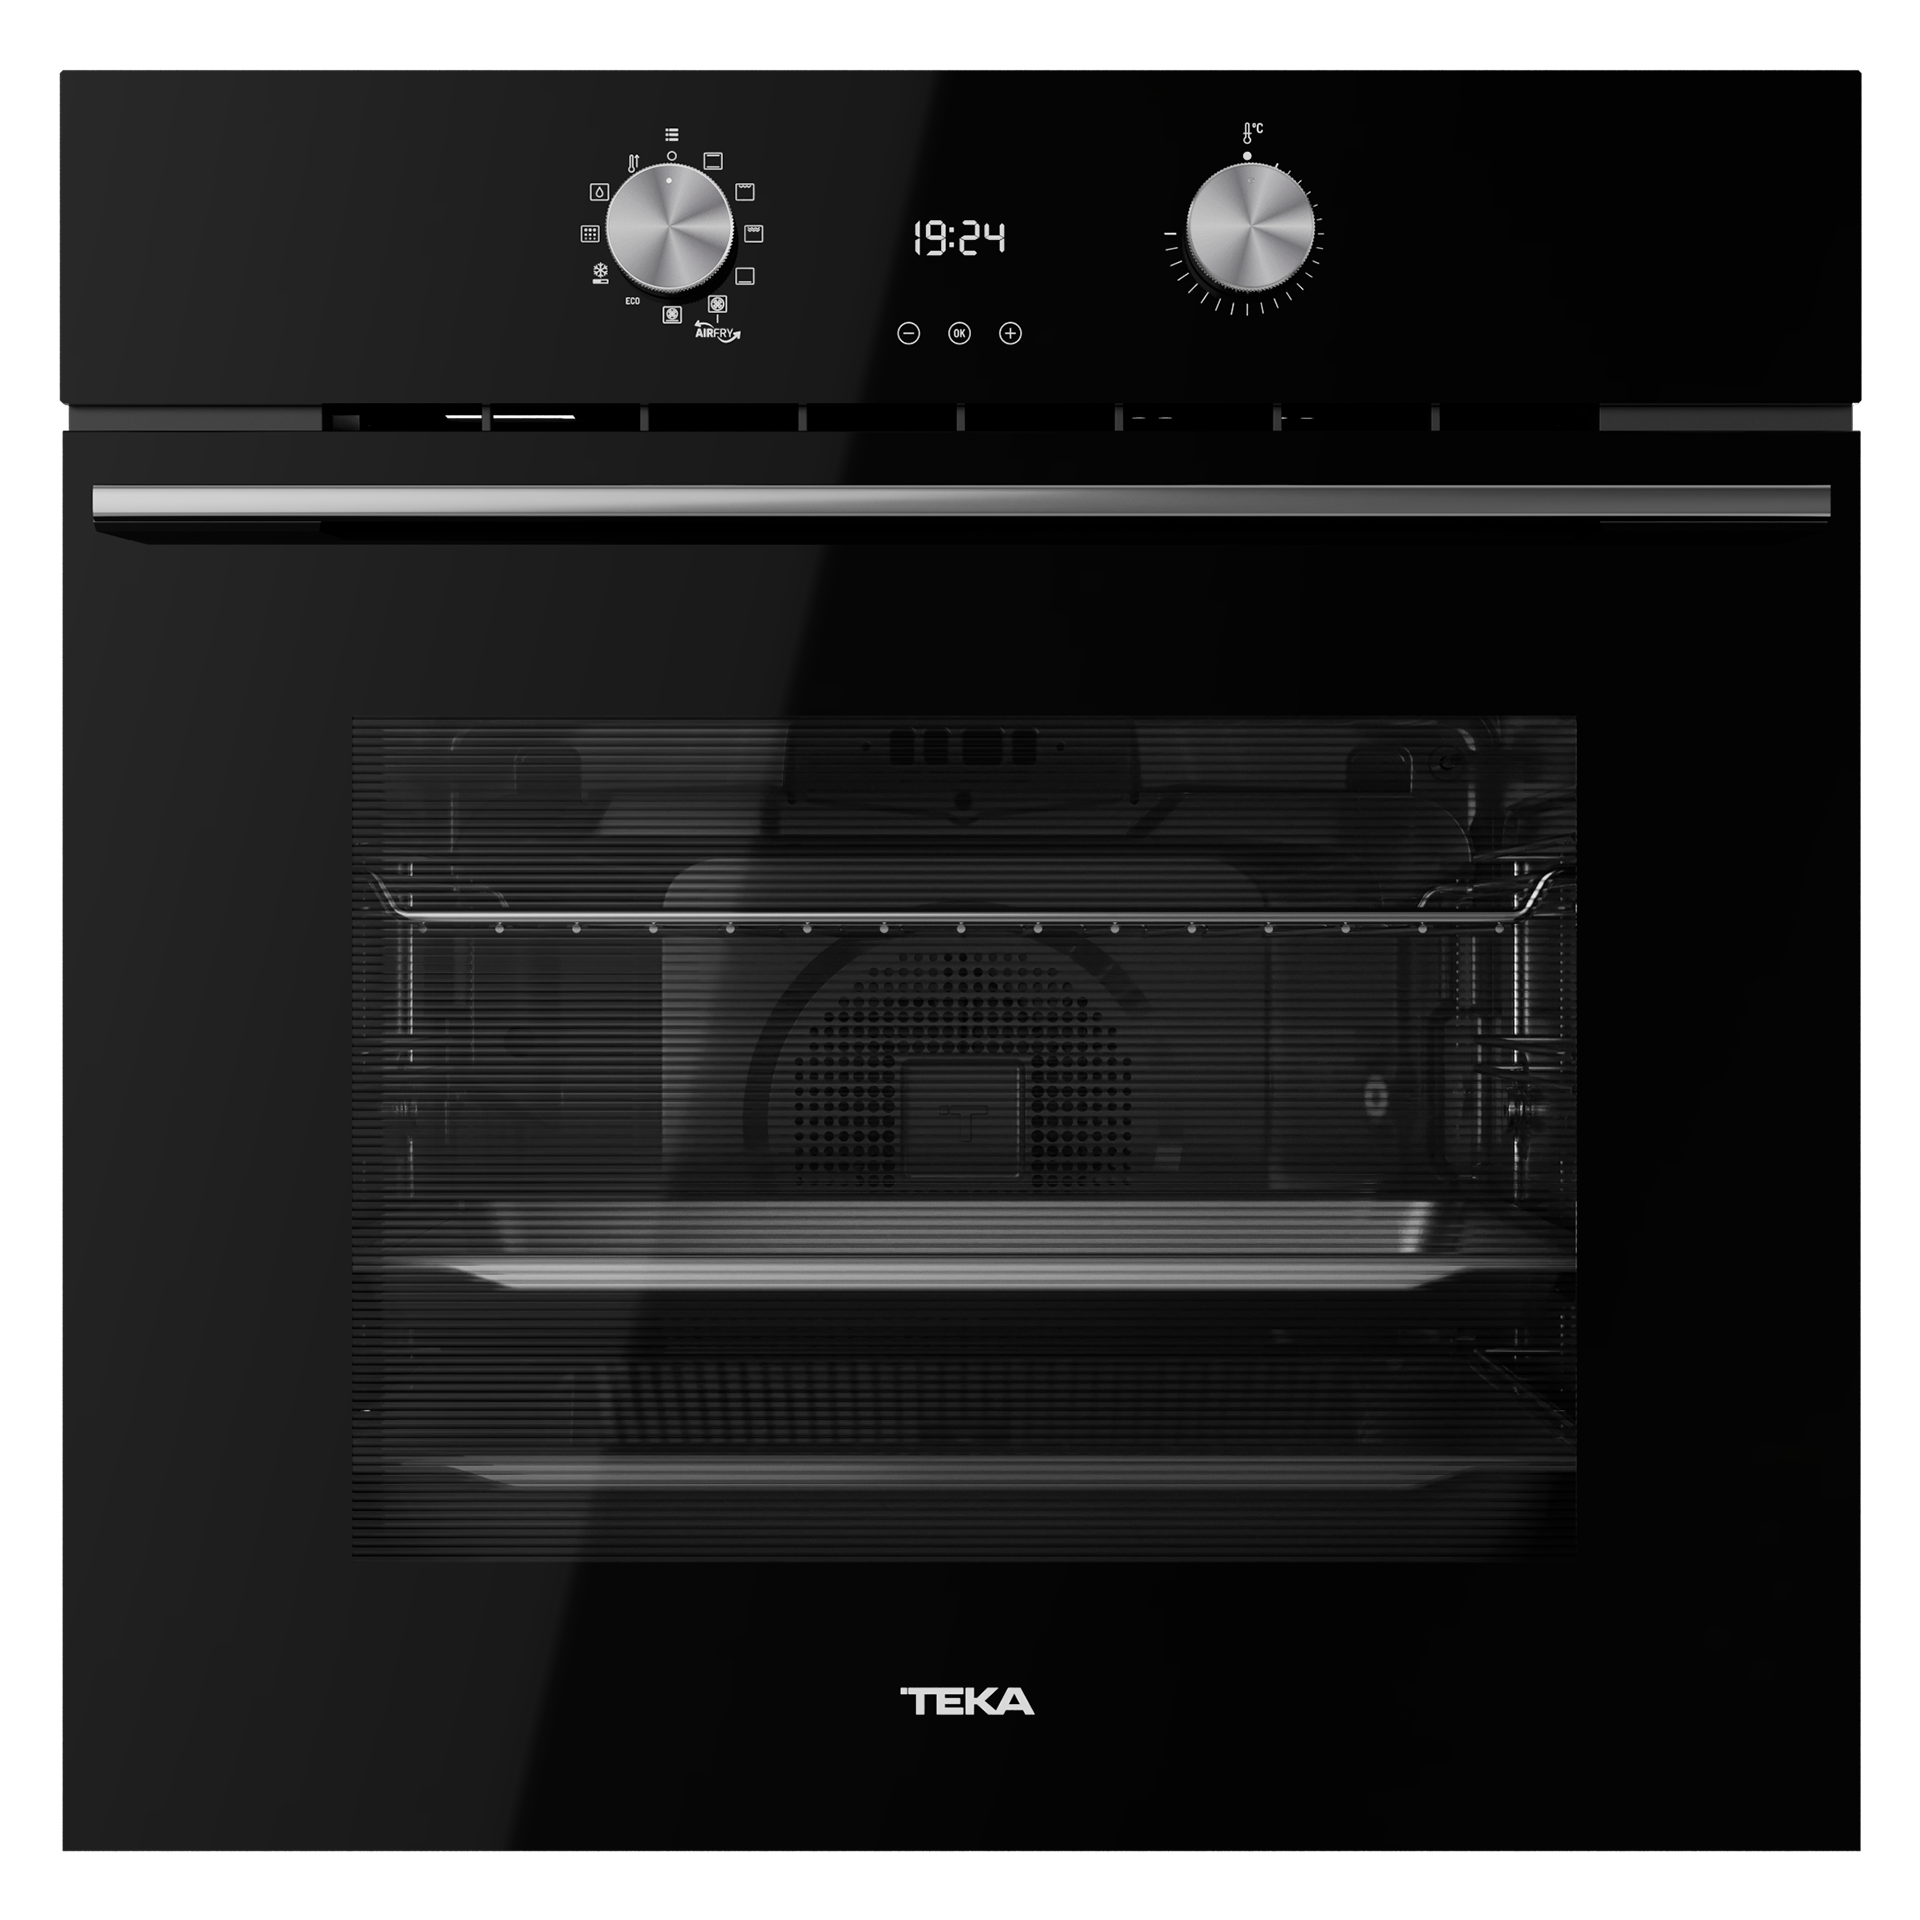 Teka lanza el AirFry HCB 6646, un horno con bandeja microperforada para  freír sin aceite